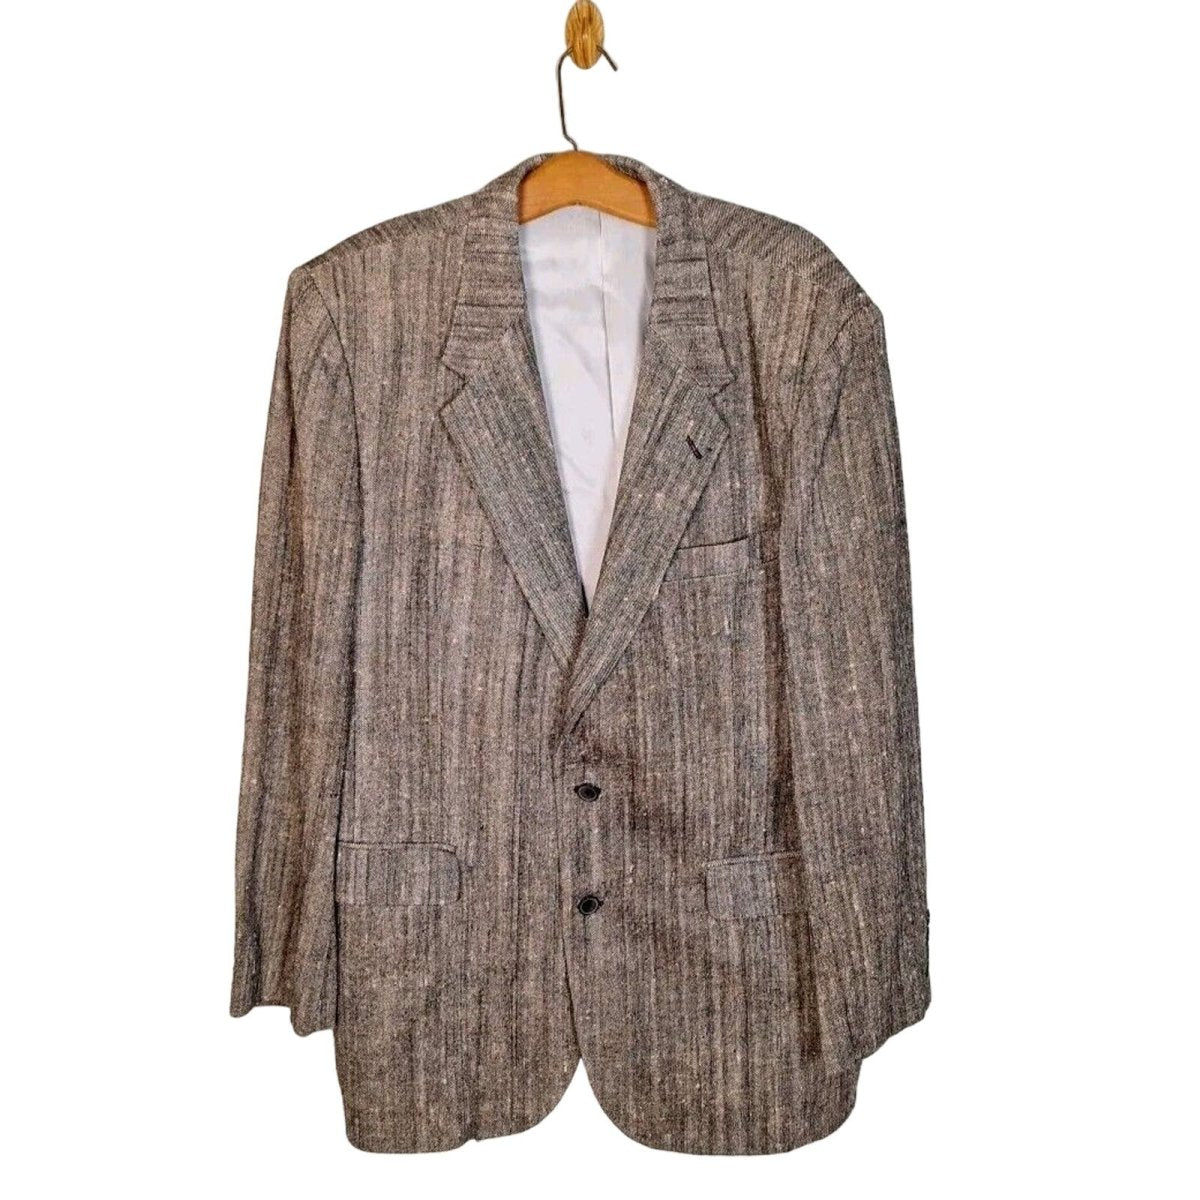 Vintage 80s/90s Raw Sizle Sport Coat Men Size 46R - themallvintage The Mall Vintage 1980s 1990s Blazers